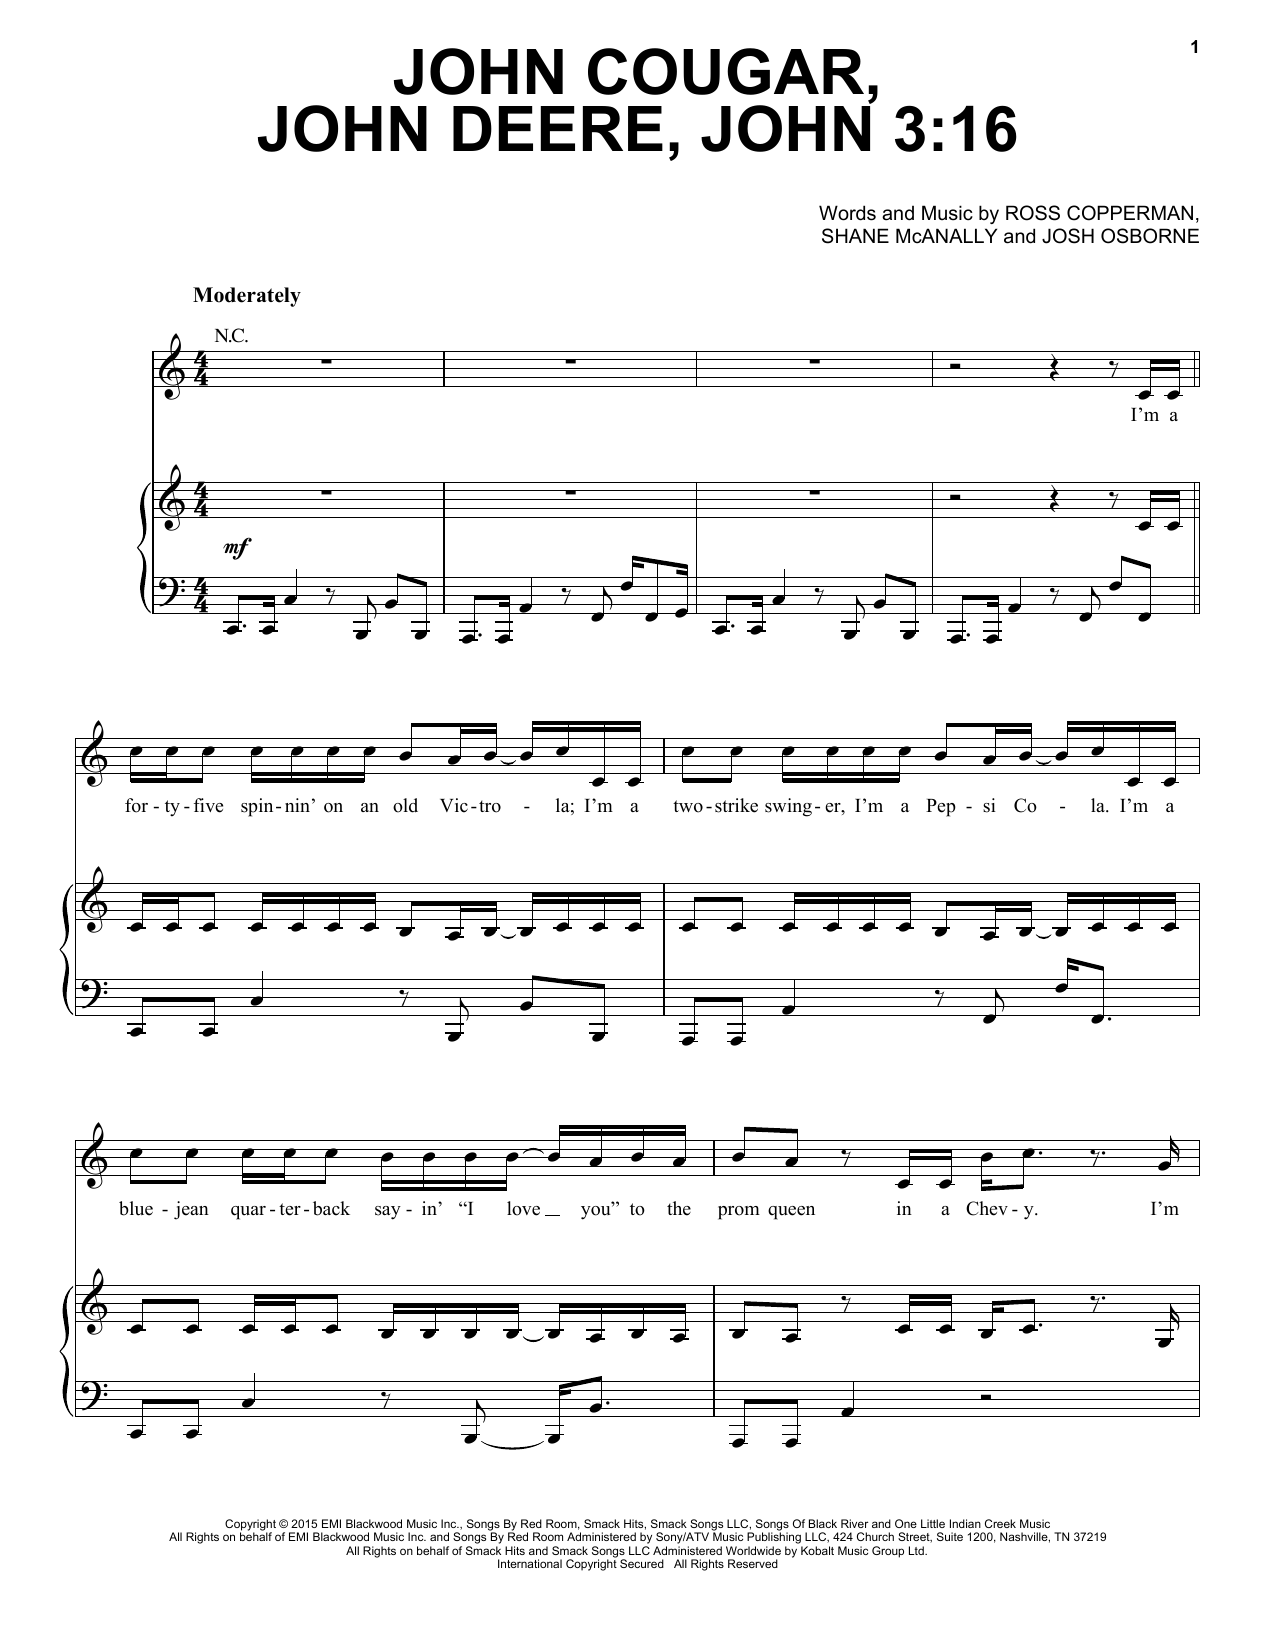 Keith Urban John Cougar, John Deere, John 3:16 sheet music notes and chords arranged for Piano, Vocal & Guitar Chords (Right-Hand Melody)